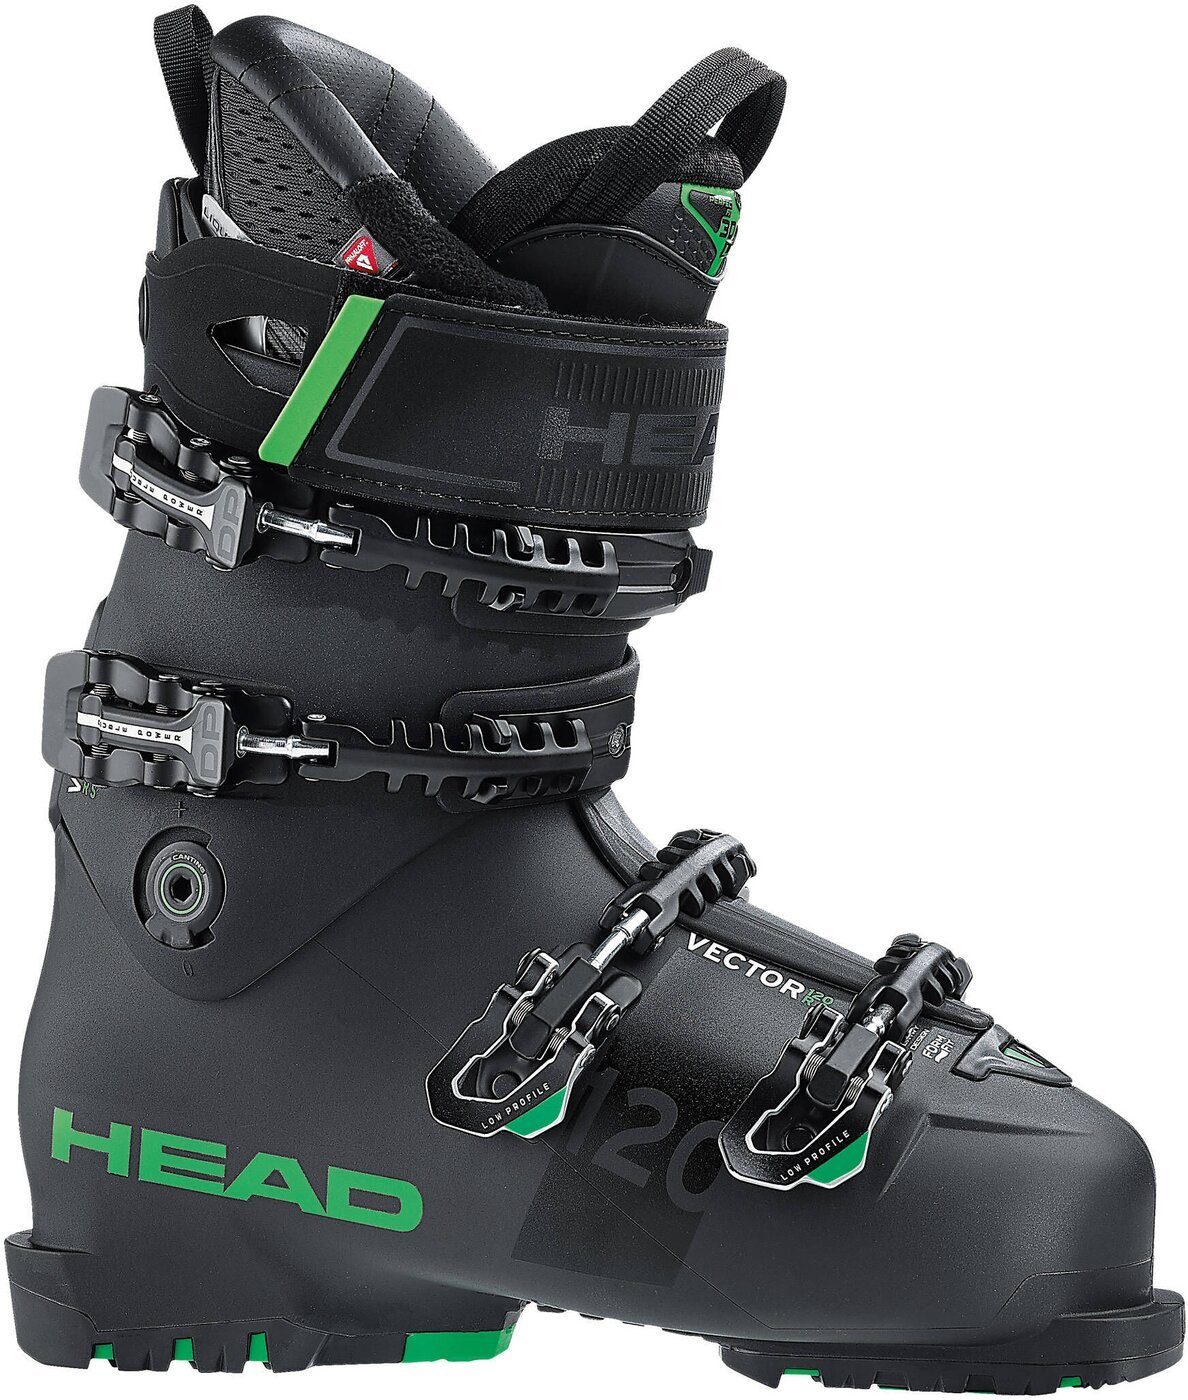 VECTOR - RS 120S Ski Head BLACK